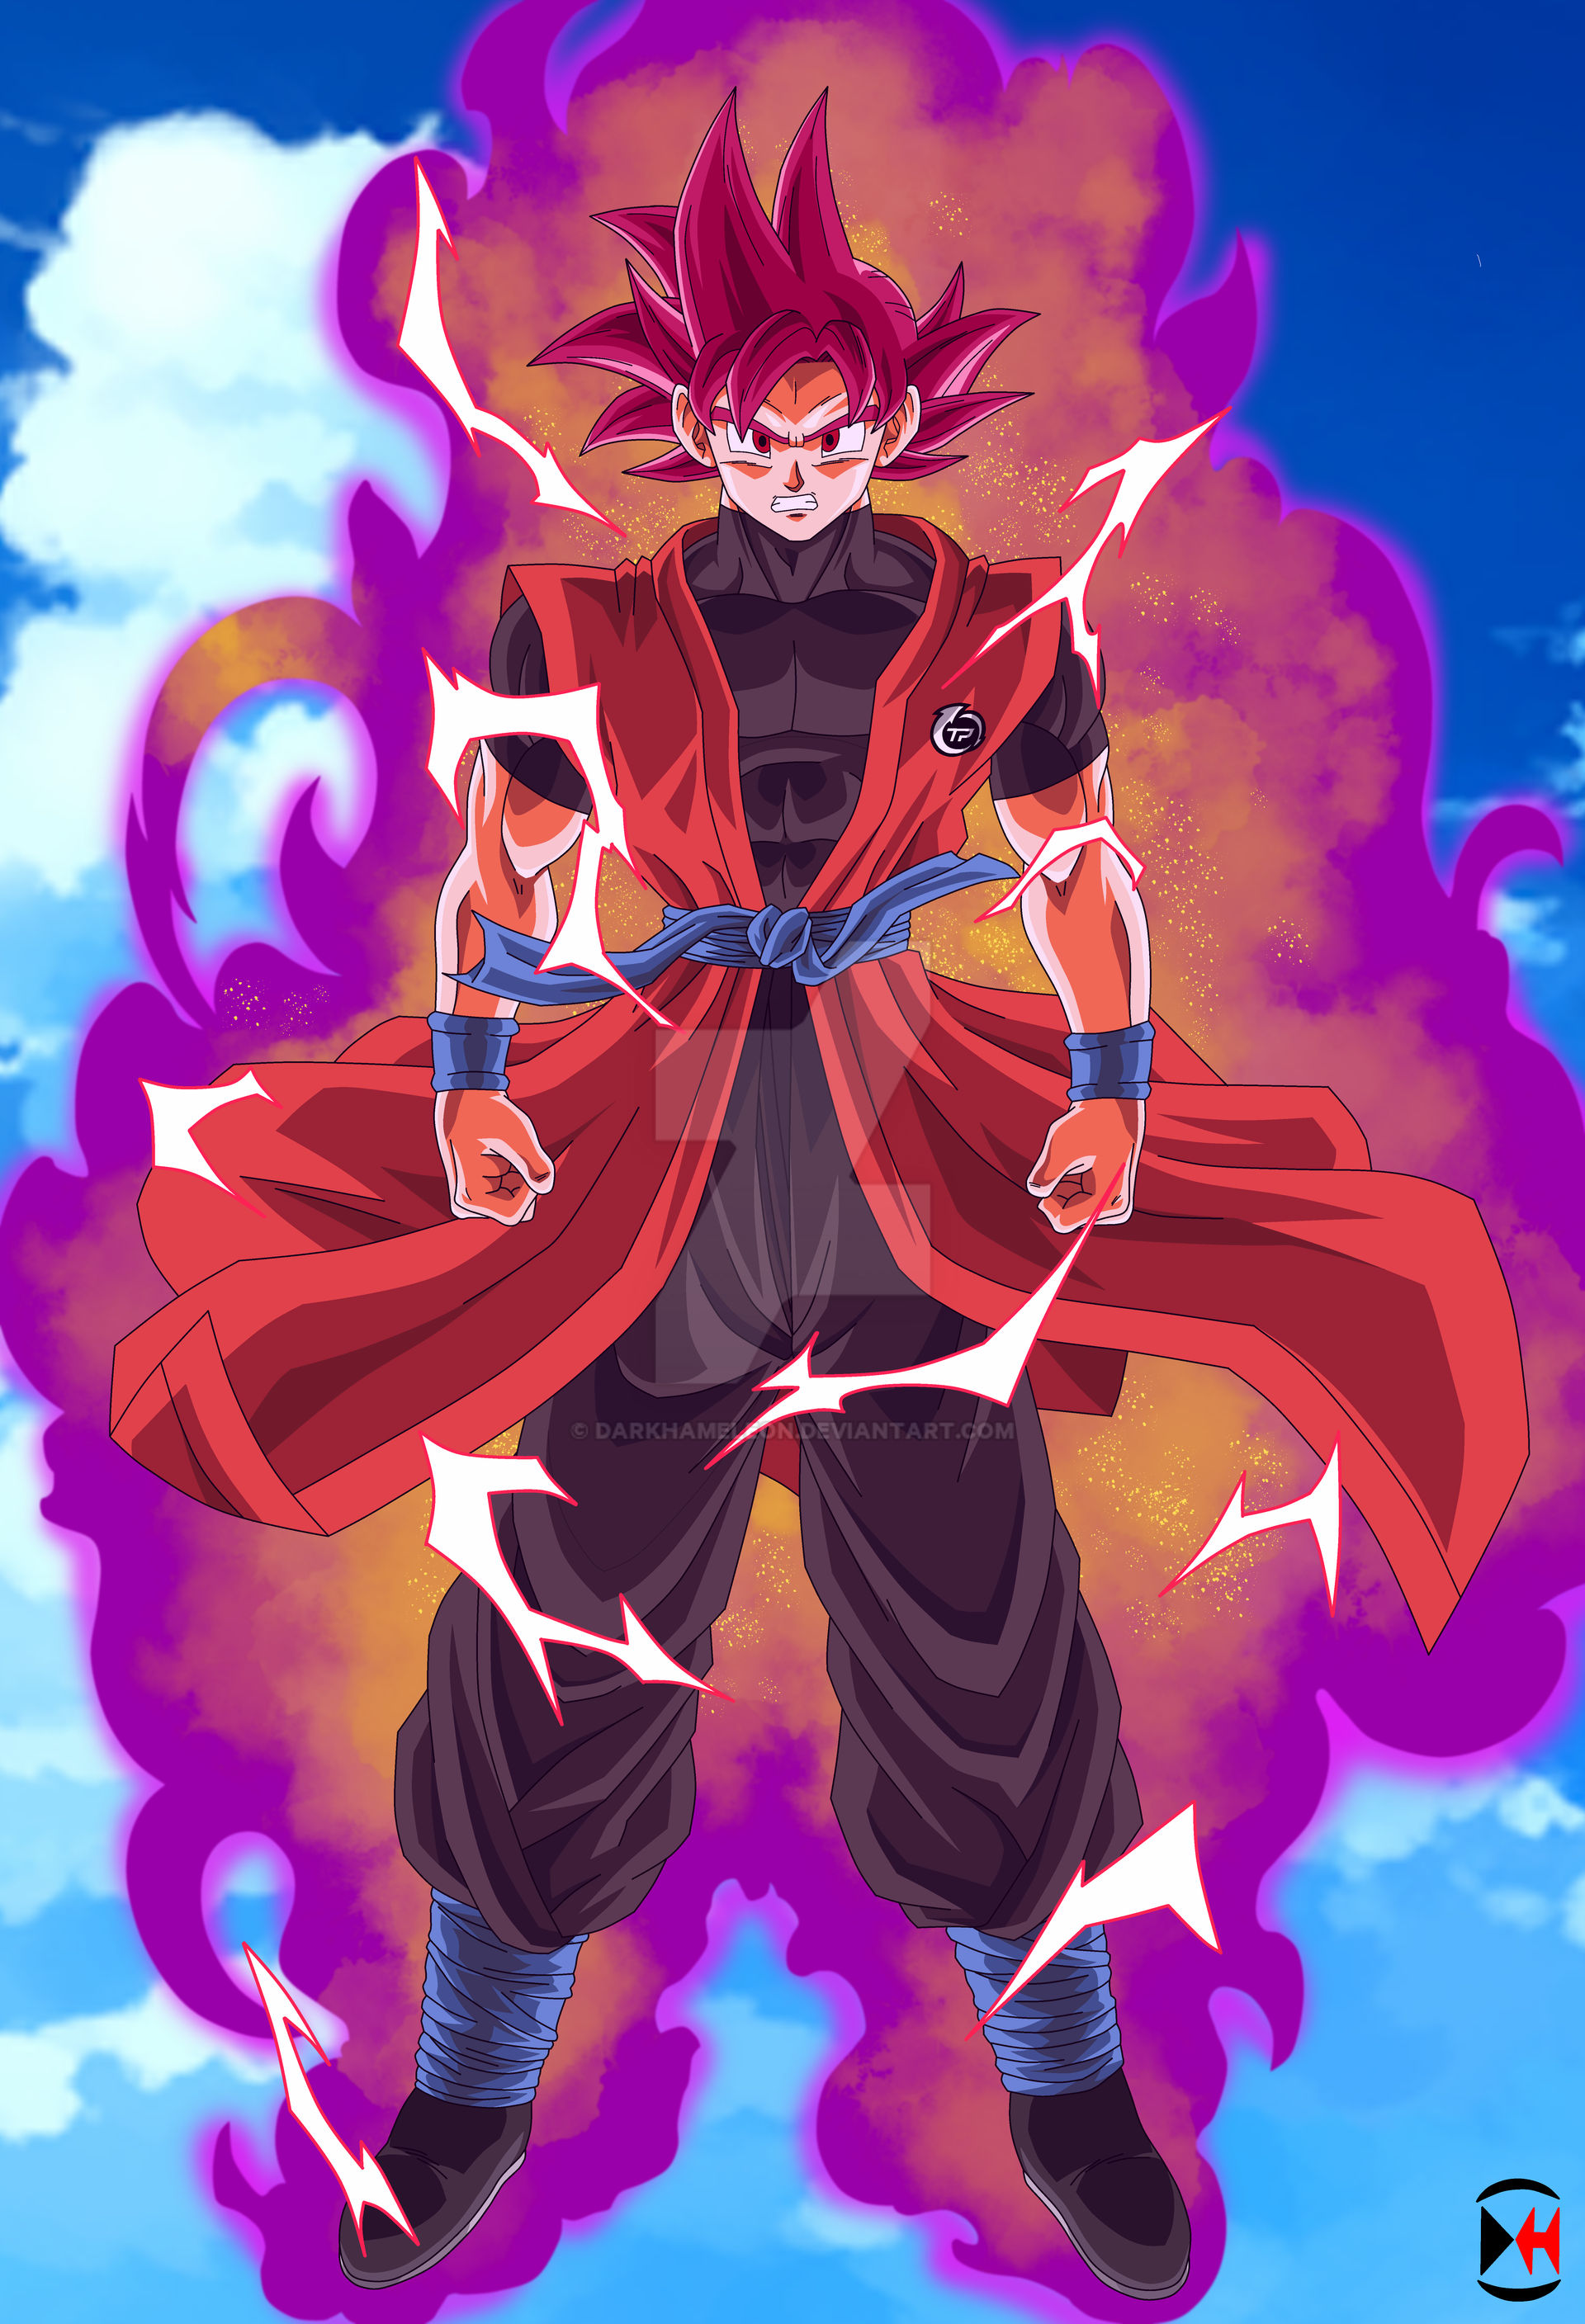 Goku | Dragonball Fanon Wiki | Fandom